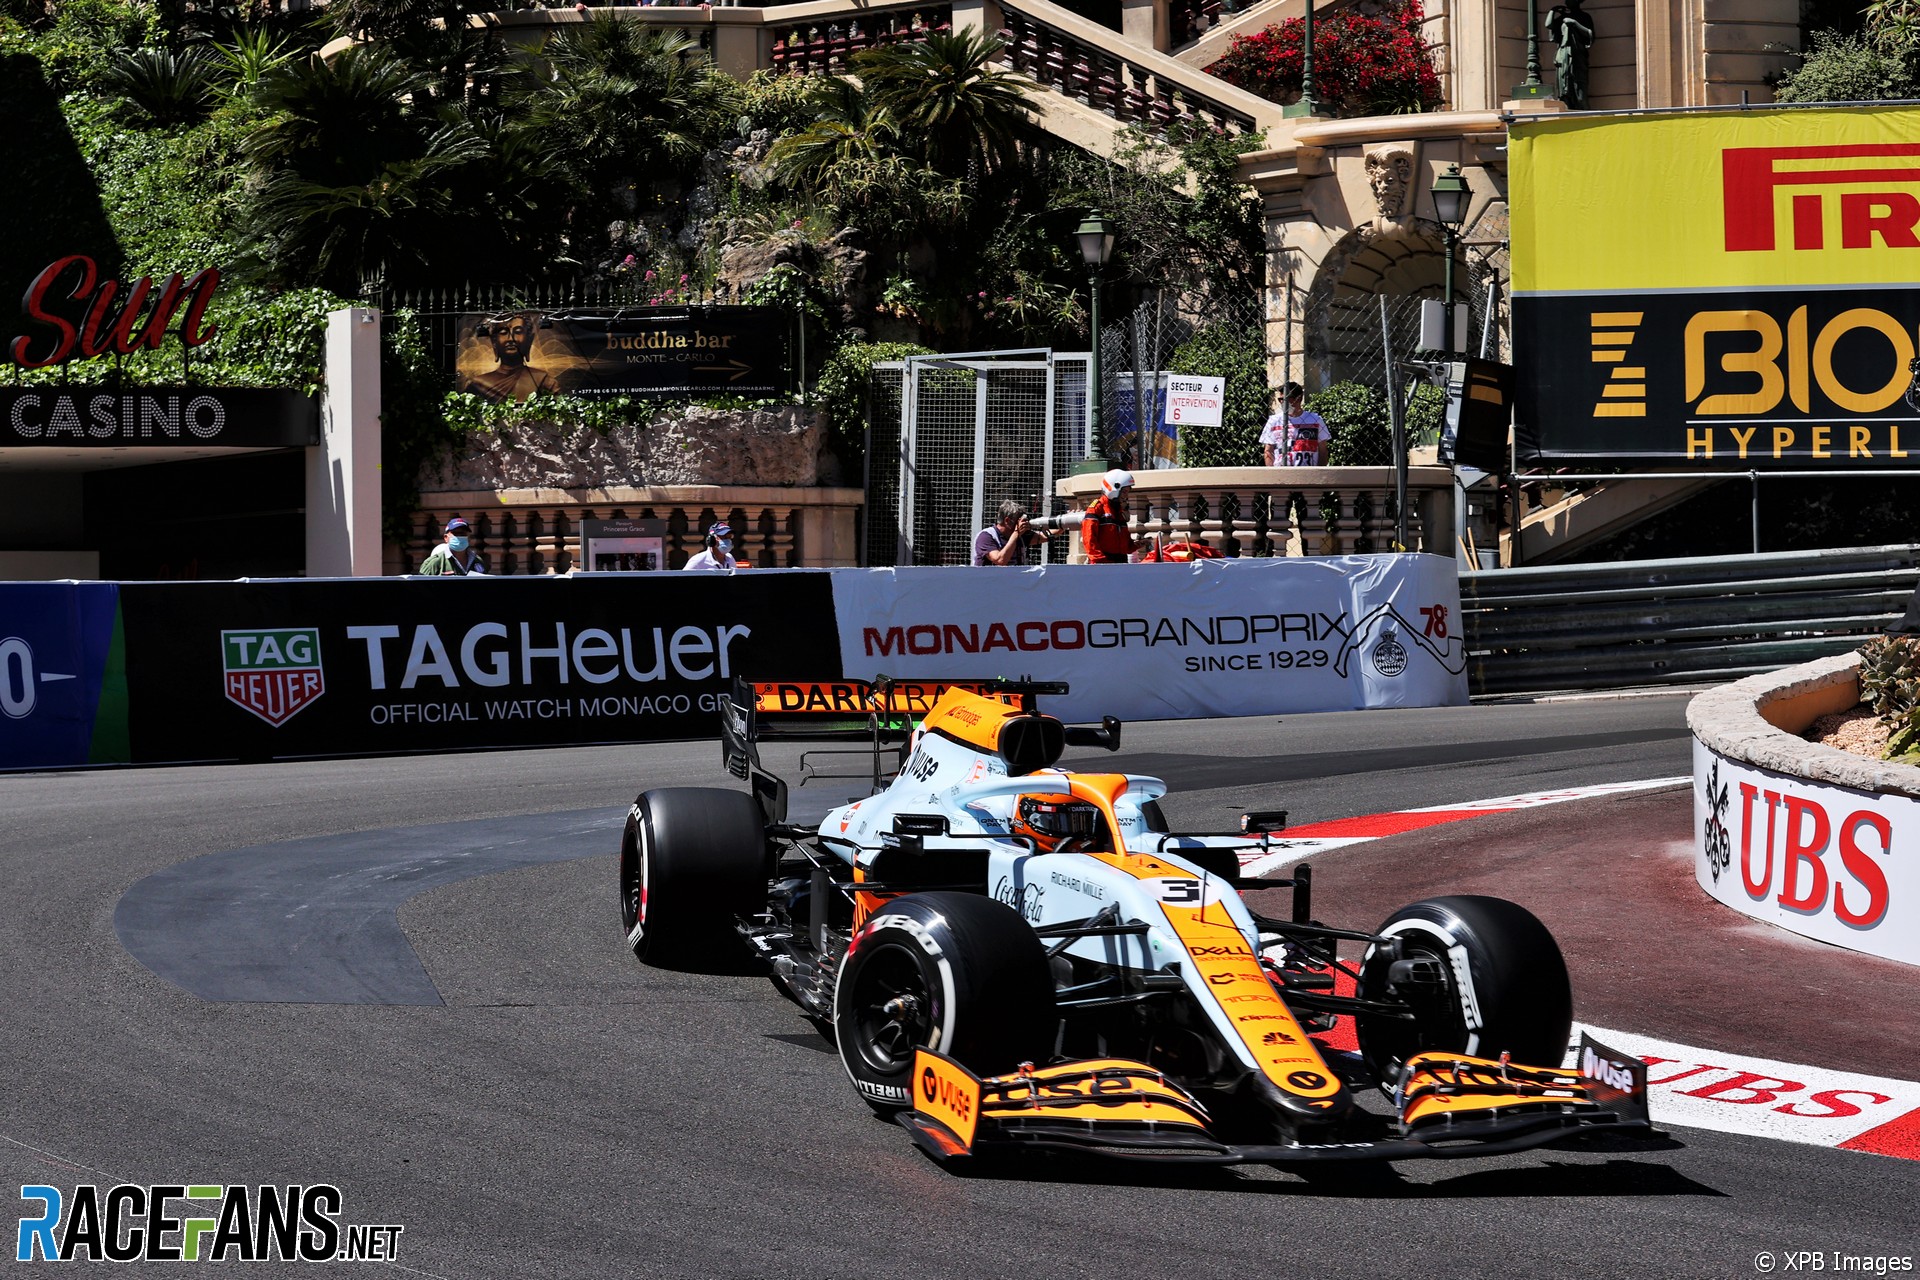 F1 pictures: 2021 Monaco Grand Prix practice | RaceFans